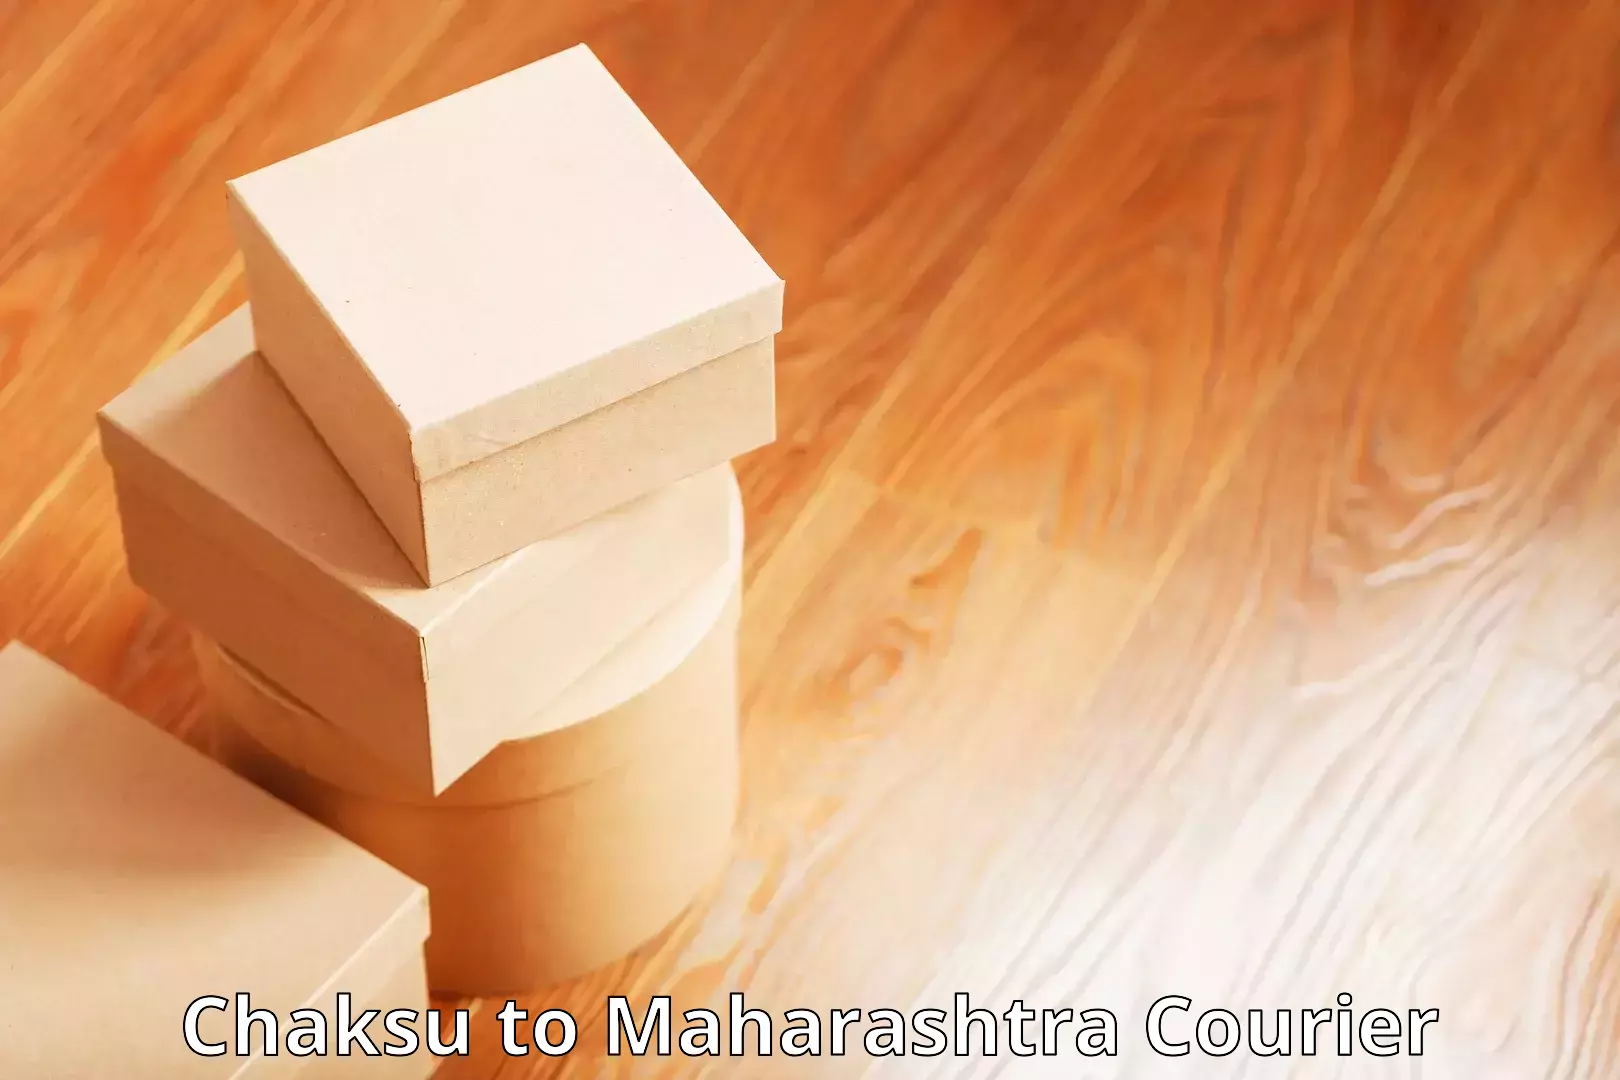 Digital courier platforms Chaksu to Maharashtra